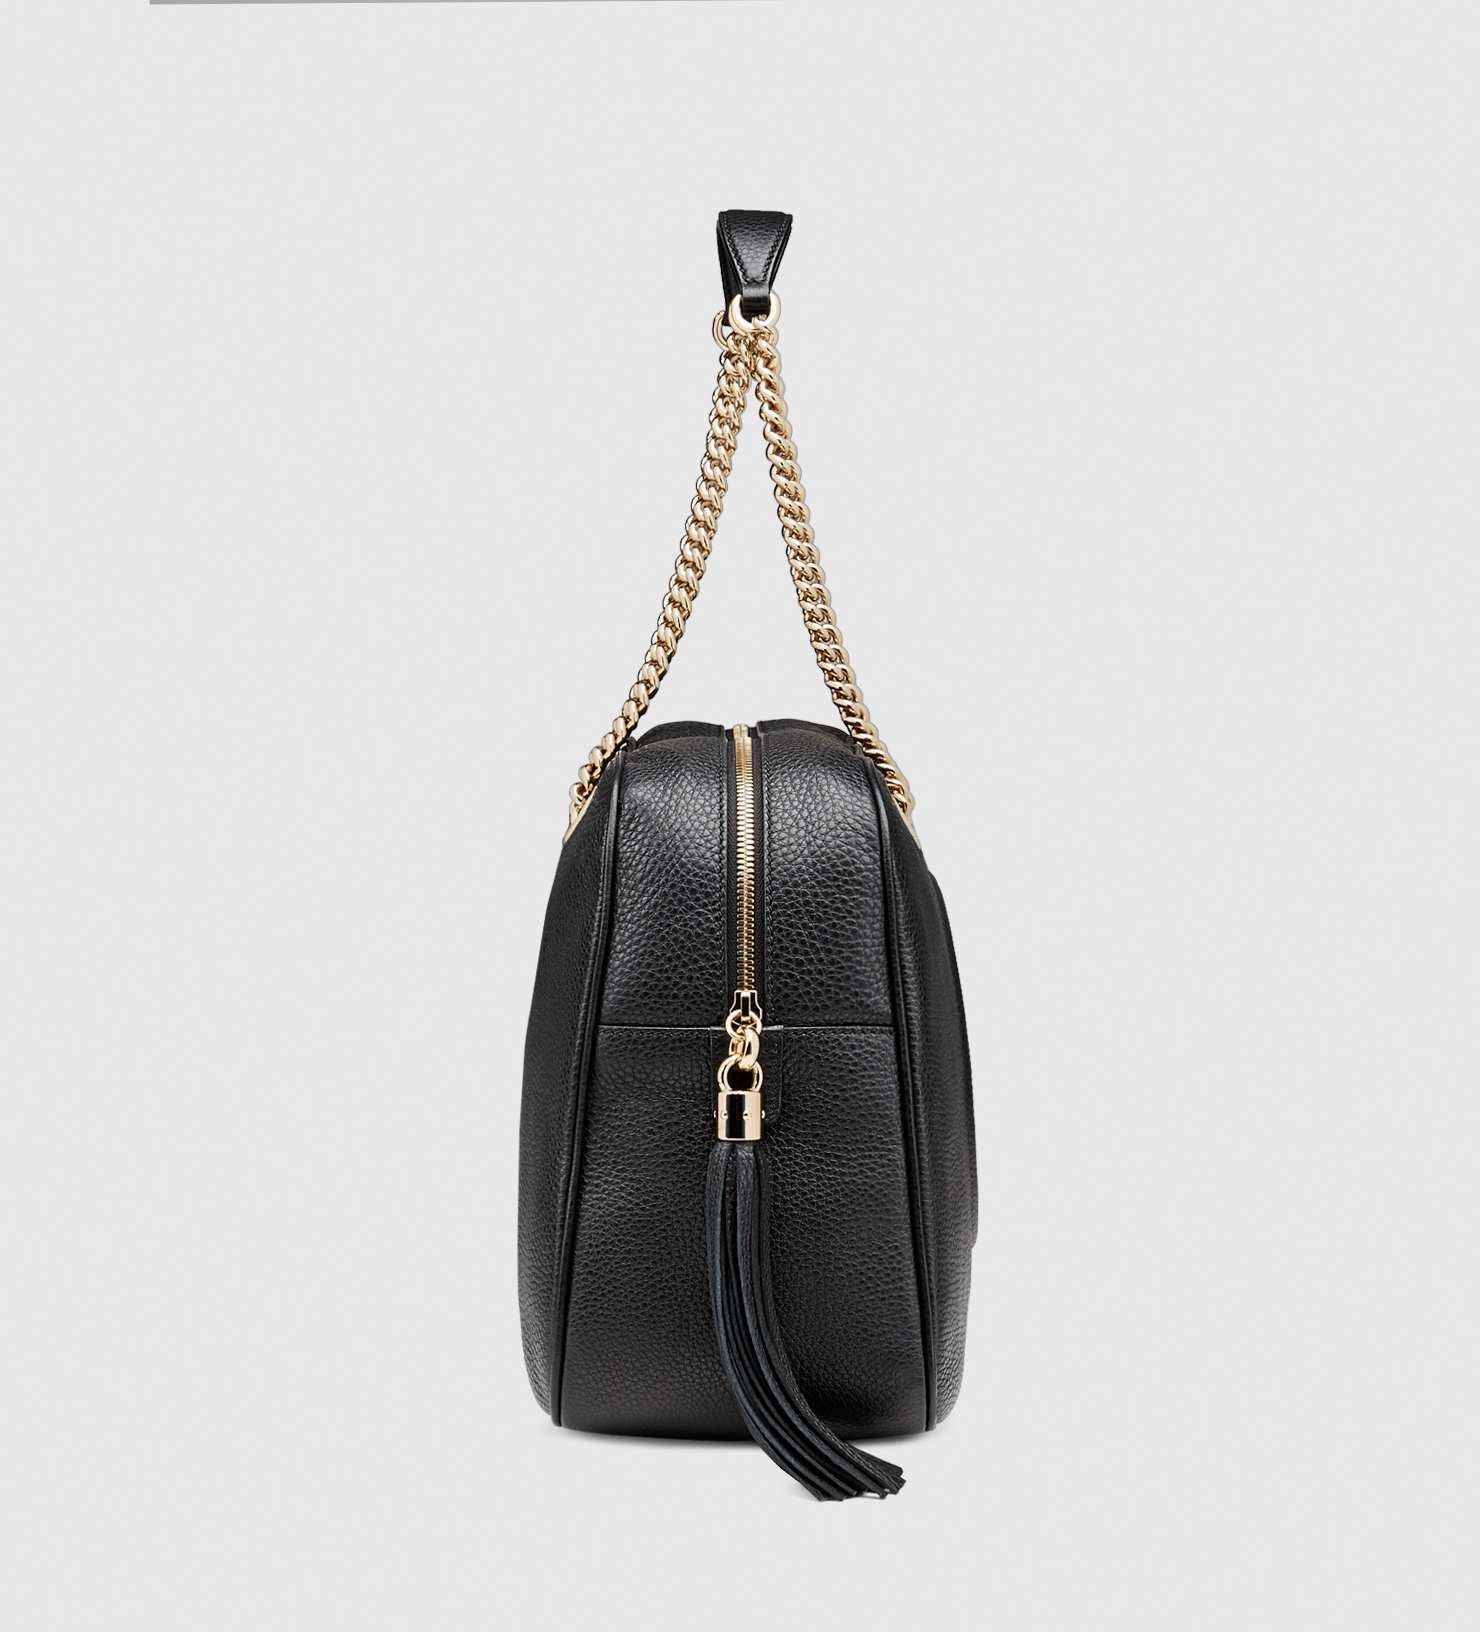 Gucci Soho Leather Large Bag | Jaguar Clubs of North America